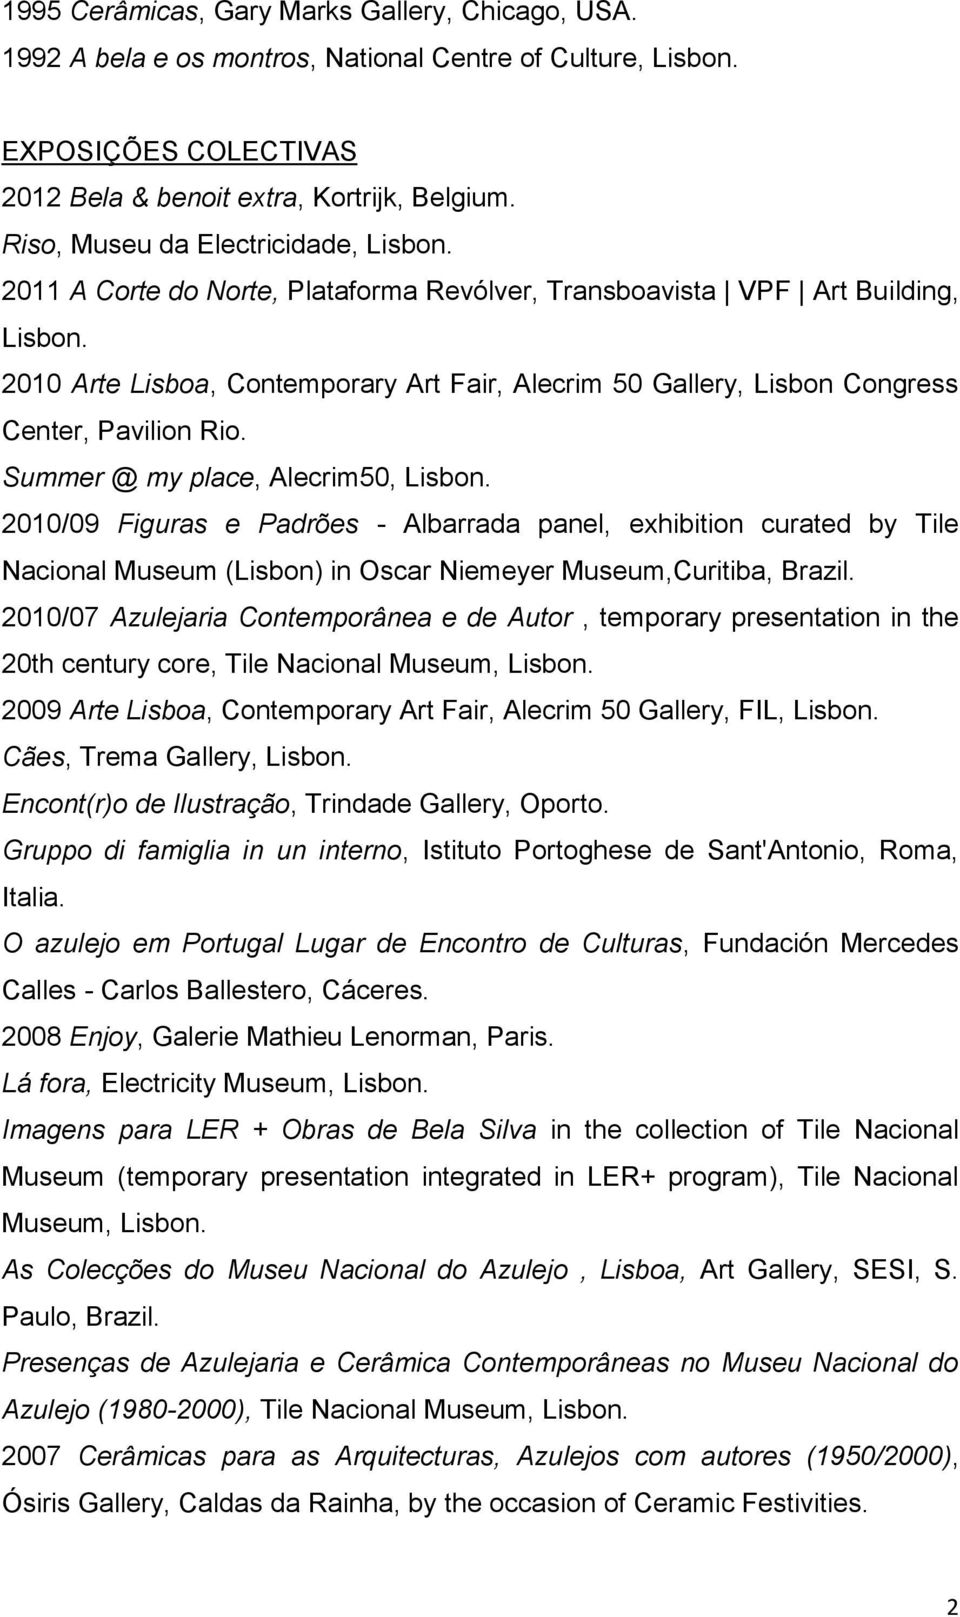 2010 Arte Lisboa, Contemporary Art Fair, Alecrim 50 Gallery, Lisbon Congress Center, Pavilion Rio. Summer @ my place, Alecrim50, Lisbon.